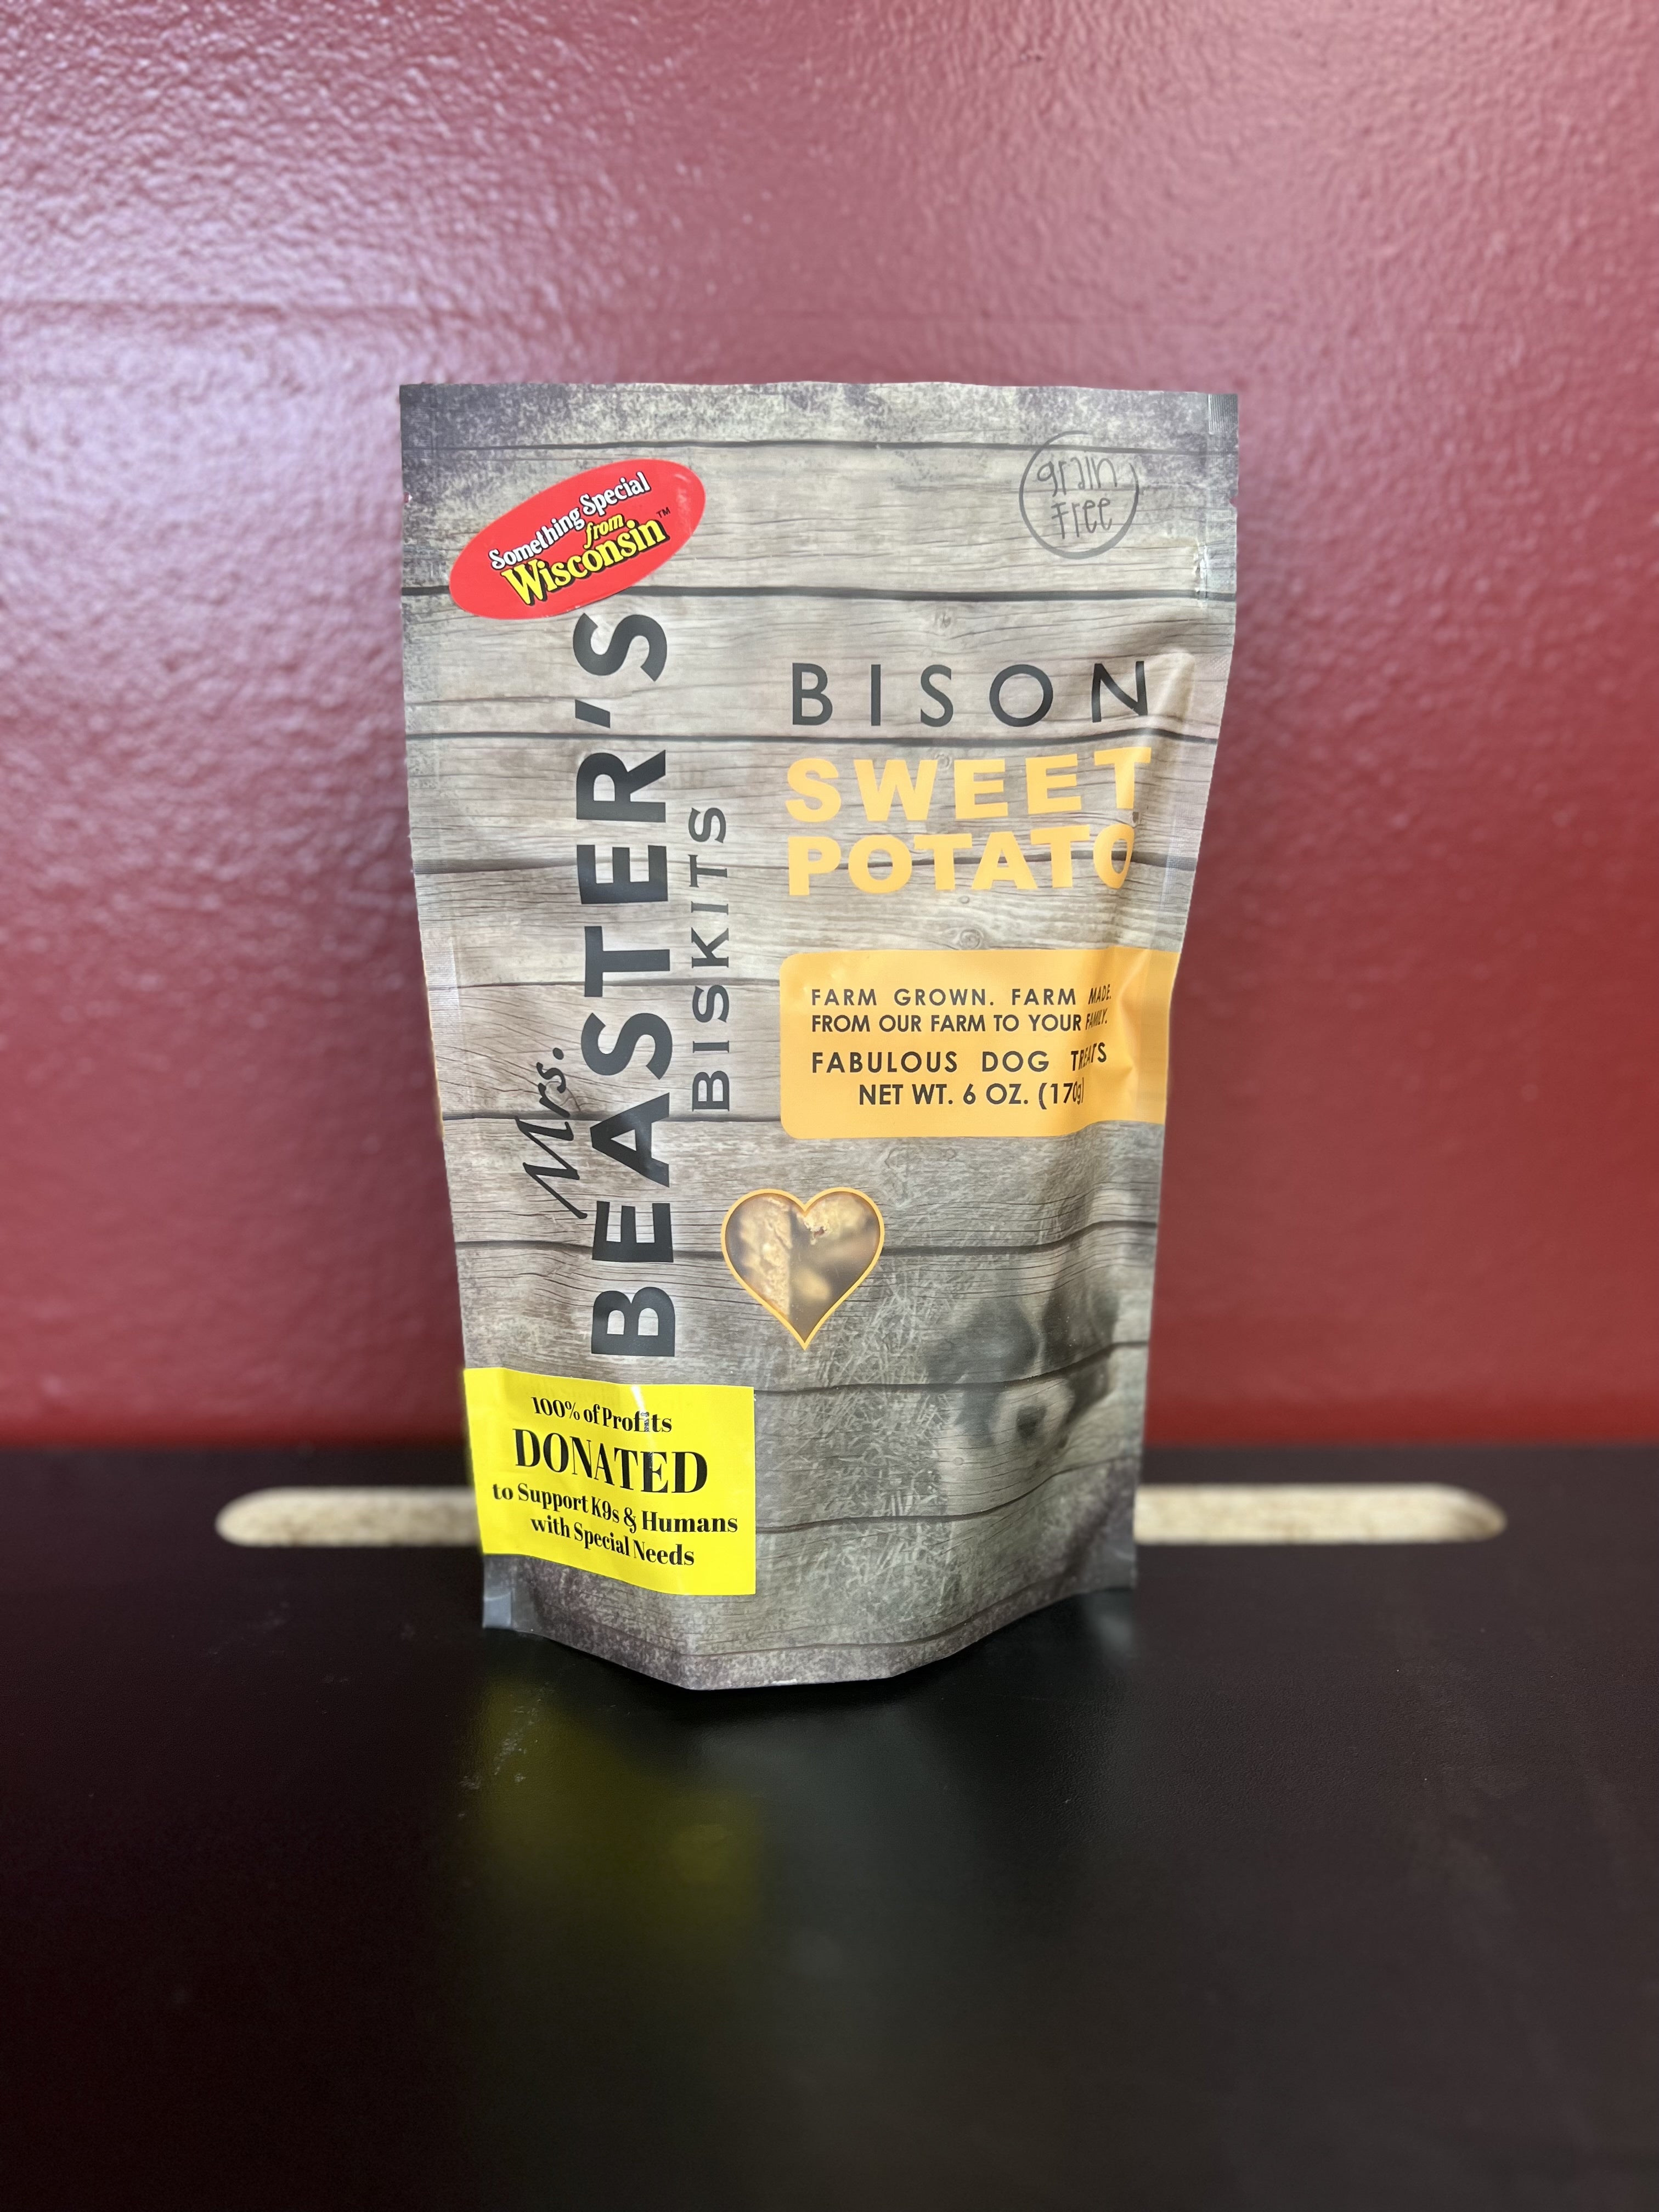 Mrs. Beaster's Grain-Free Biskits Bison Sweet Potato